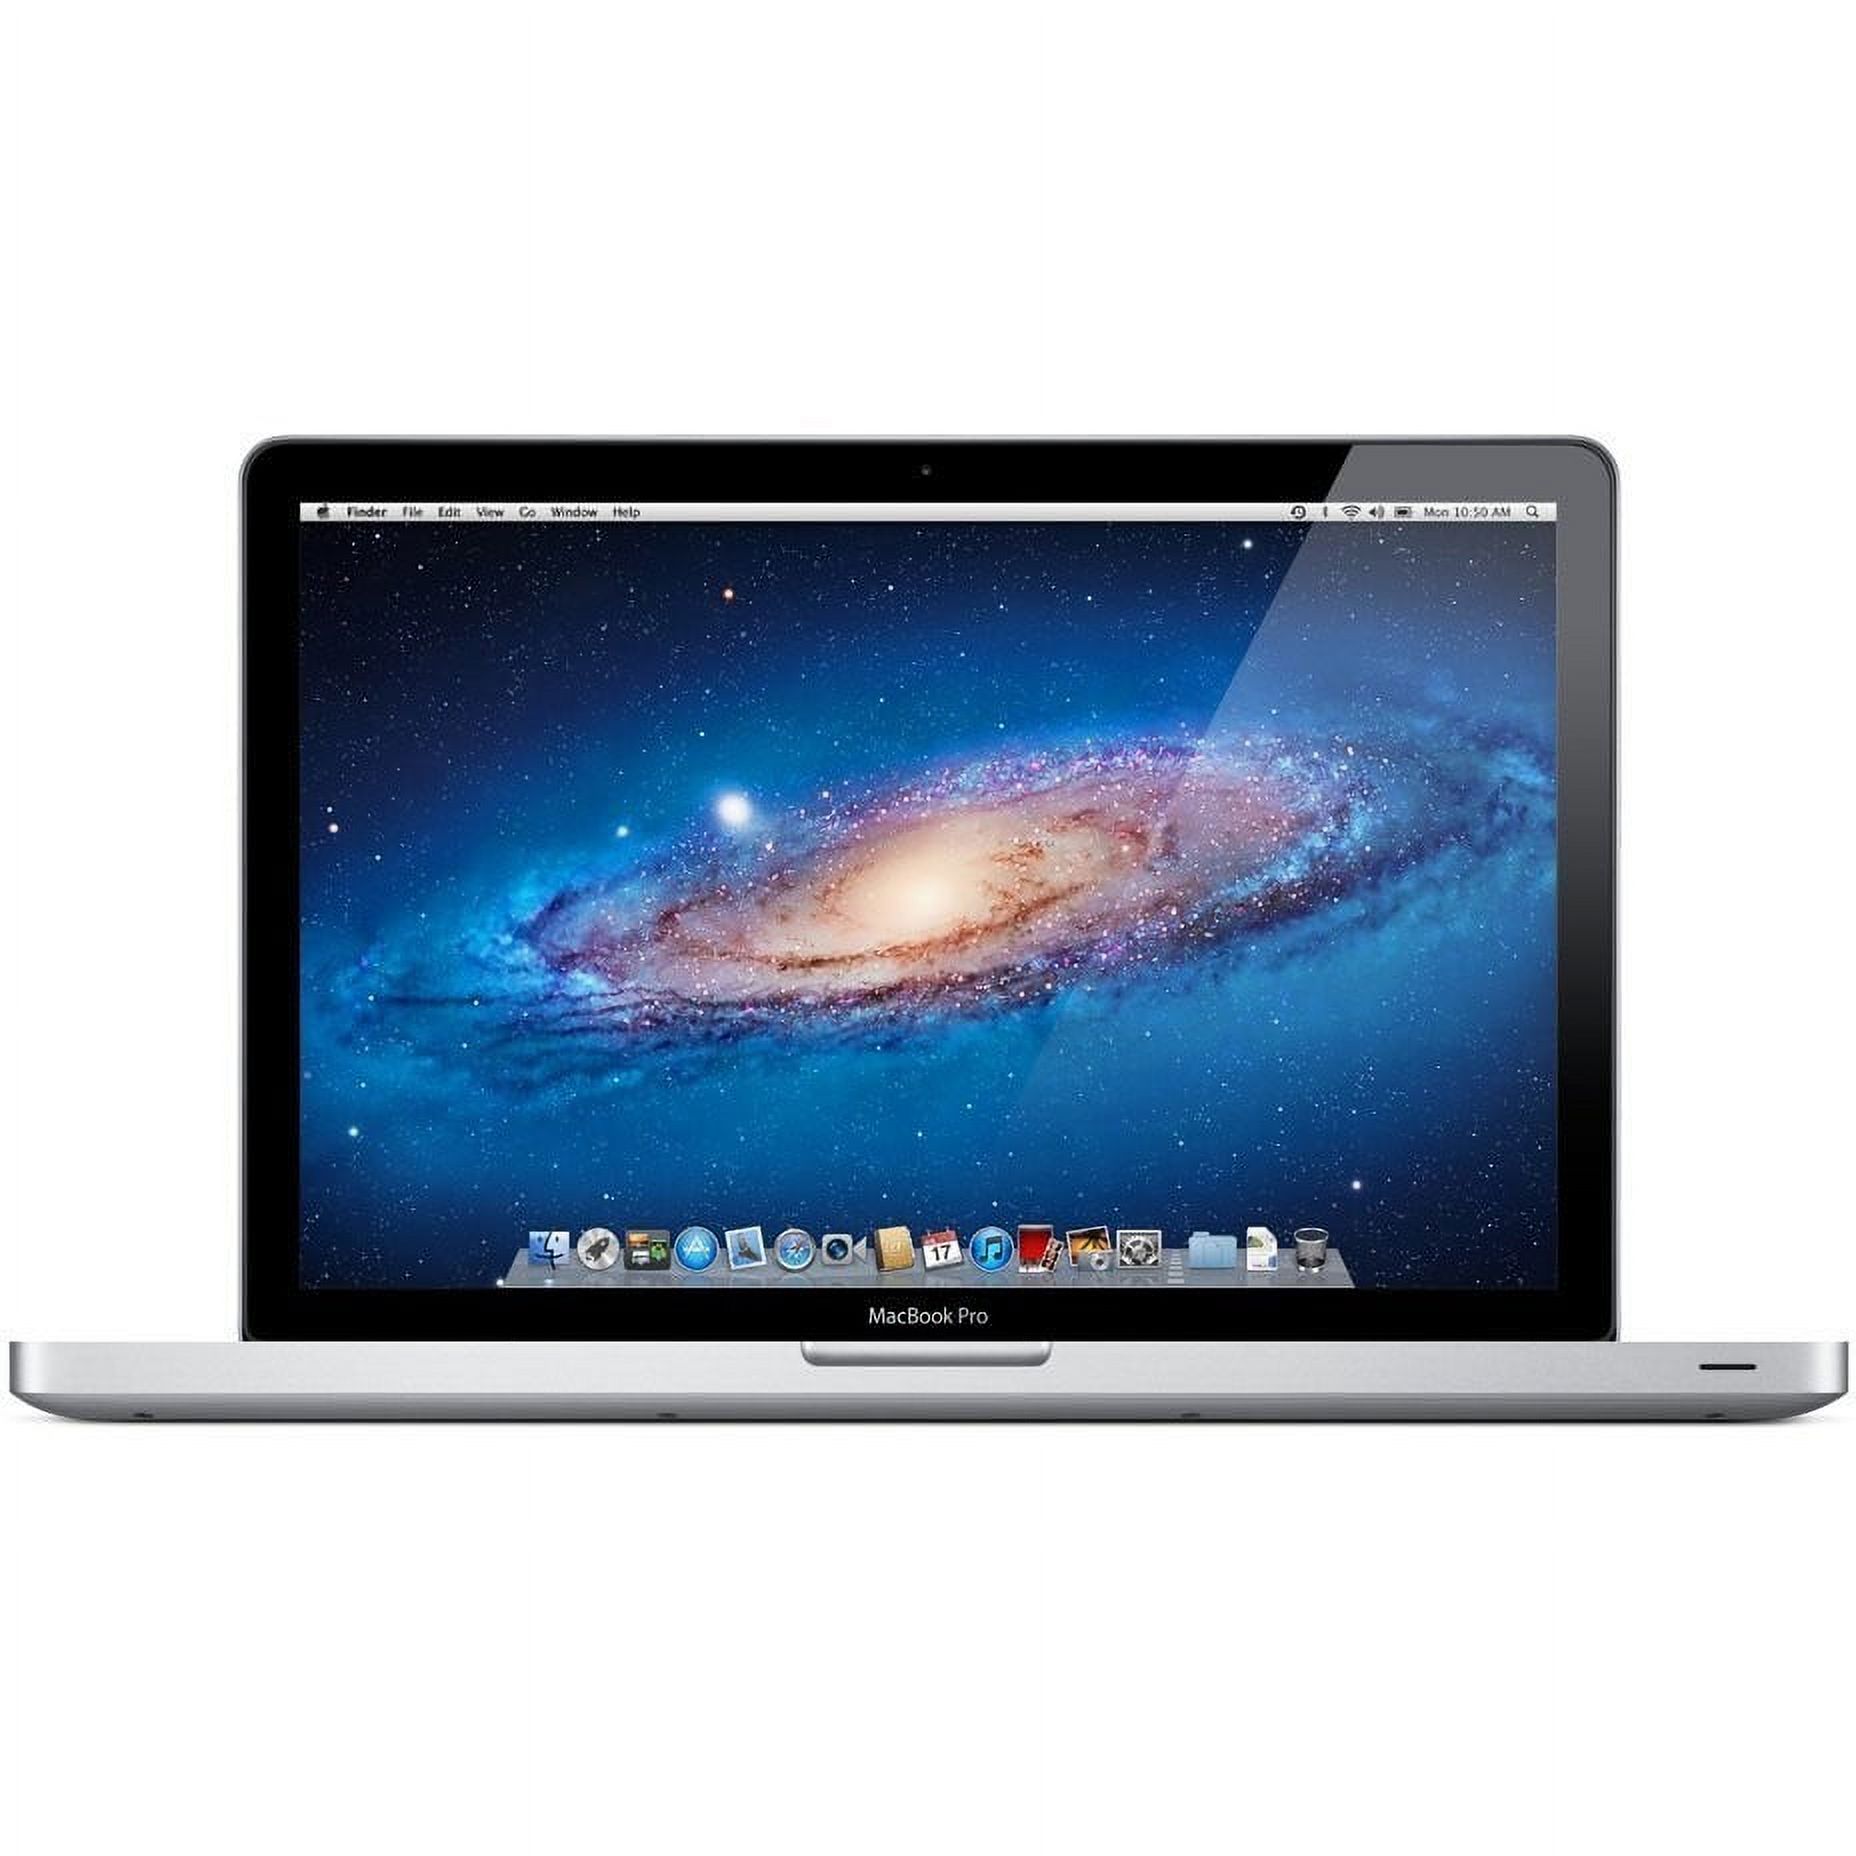 Restored Apple MacBook Pro 15.4" Laptop Intel i7 Quad Core 2.3GHz 4GB 500GB - MD103LL/A (Refurbished) - image 1 of 2